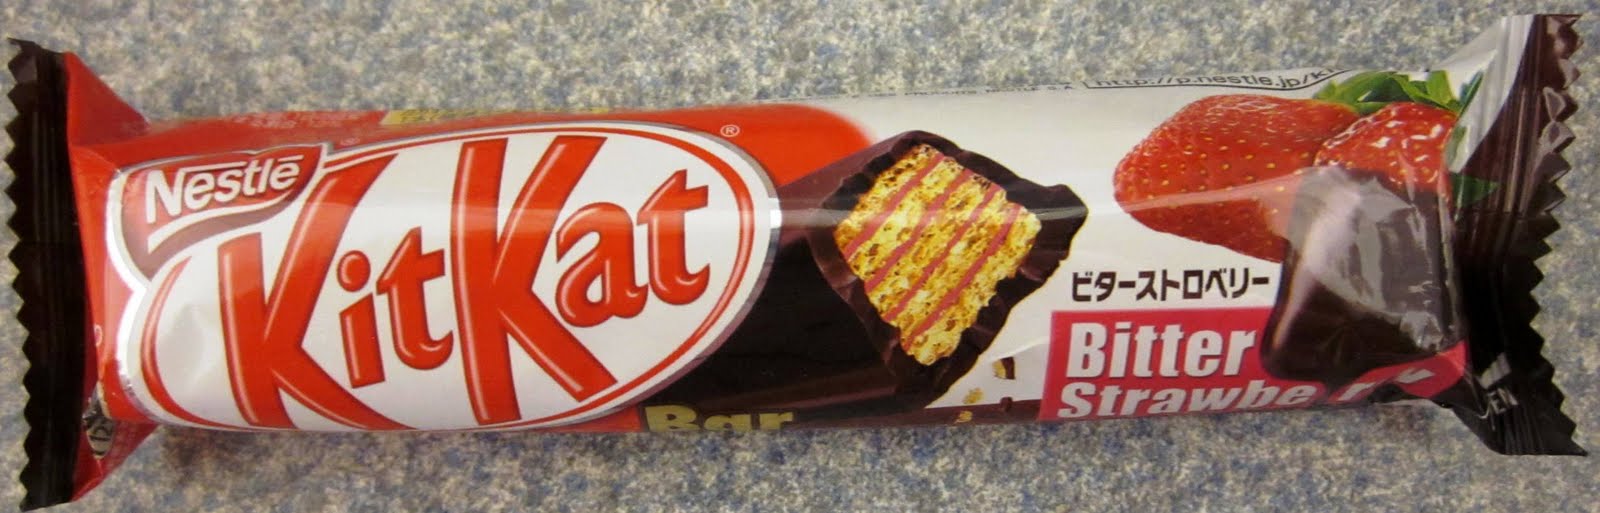 Big Kit Kat Bar Nutrition